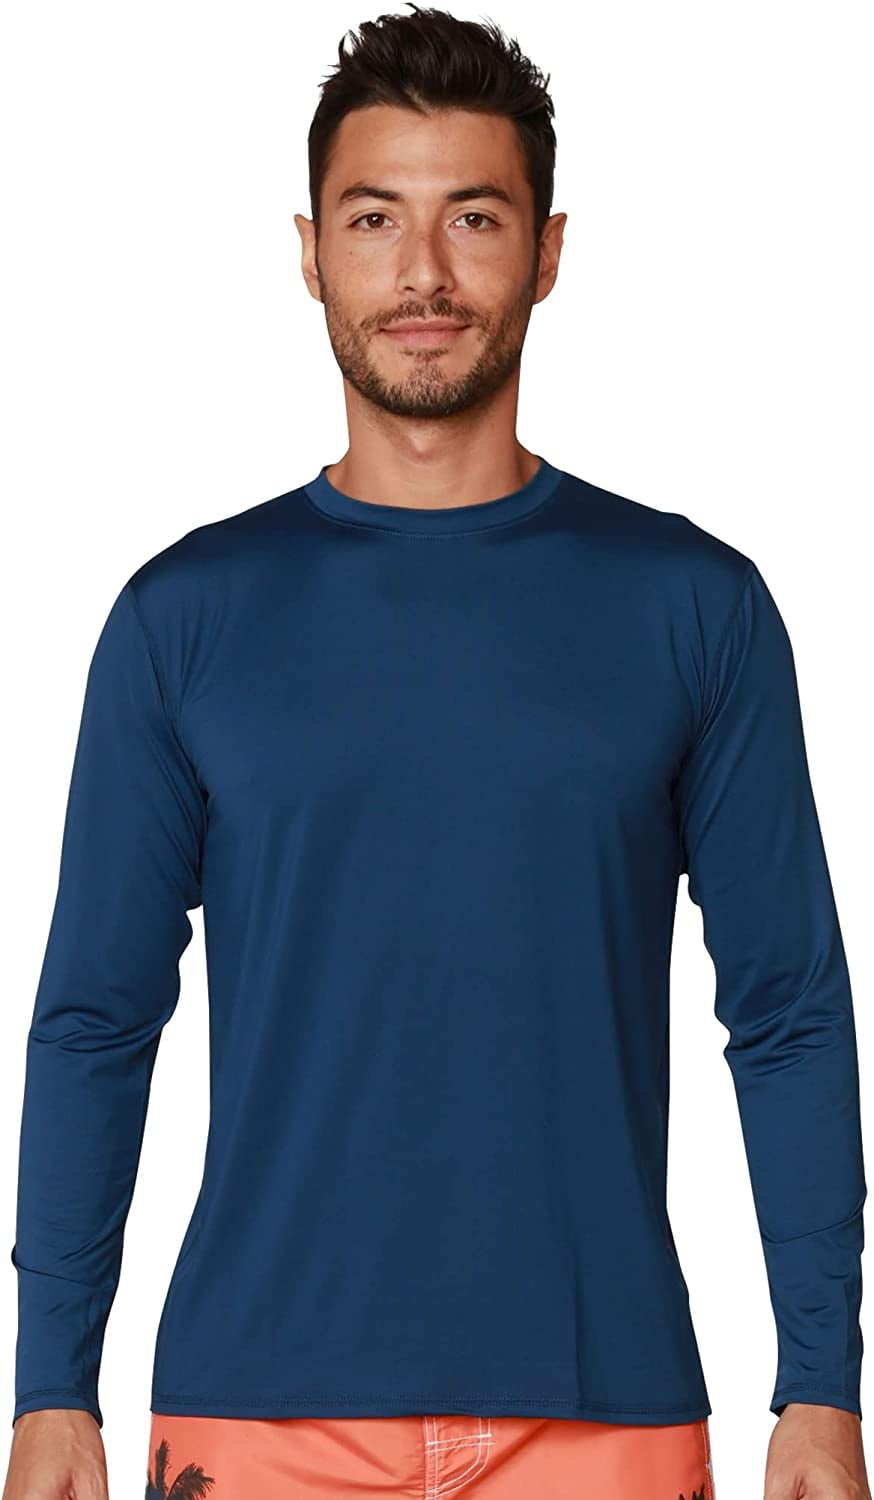 InGear Dry Fit Swim Shirts For Men Uv Sun Protective Rash Guard Workout  Shirts 